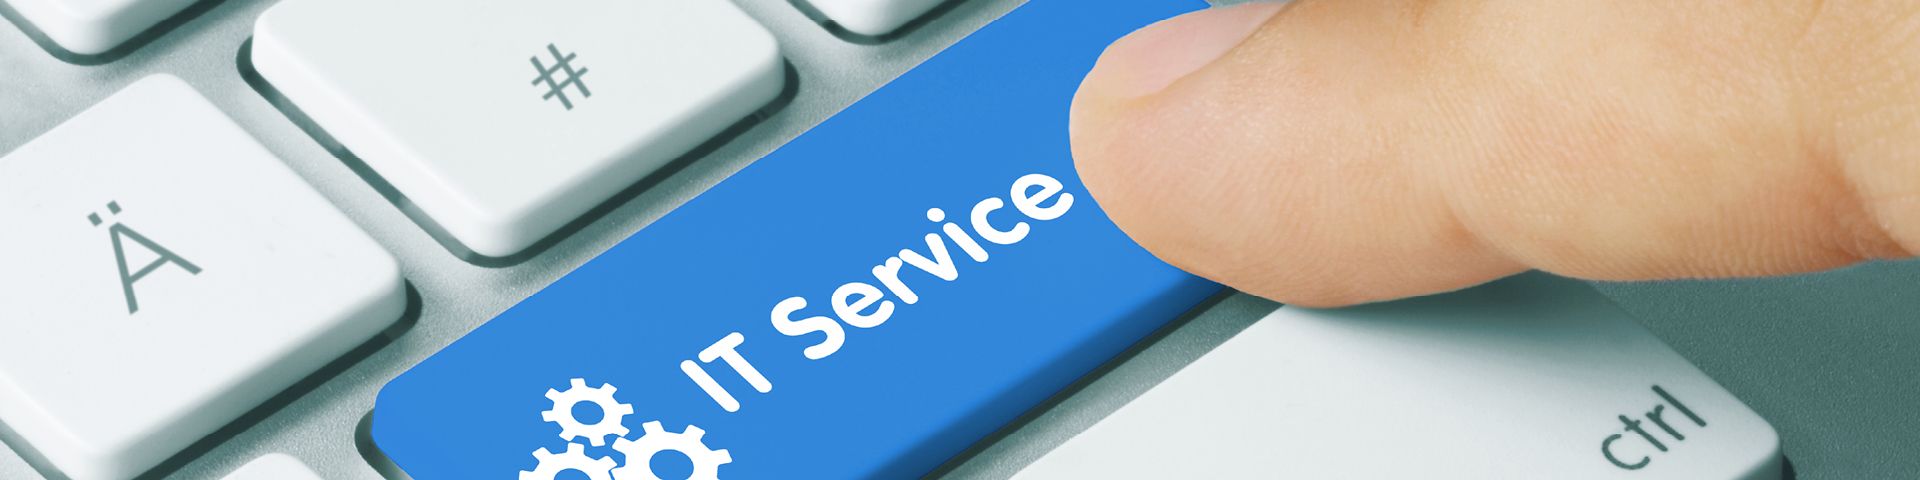 IT Service